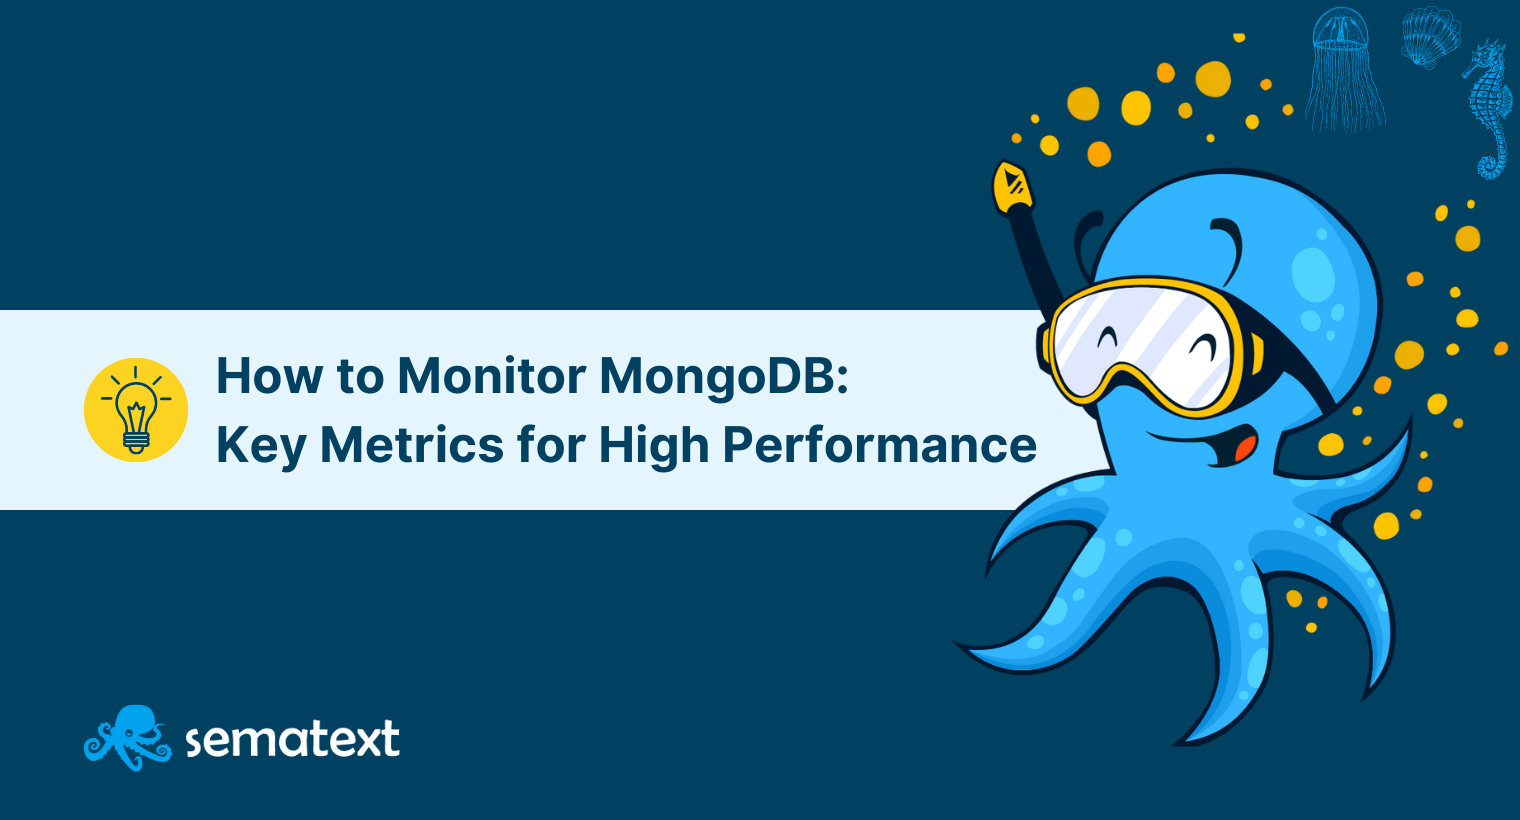 mongodb performance metrics